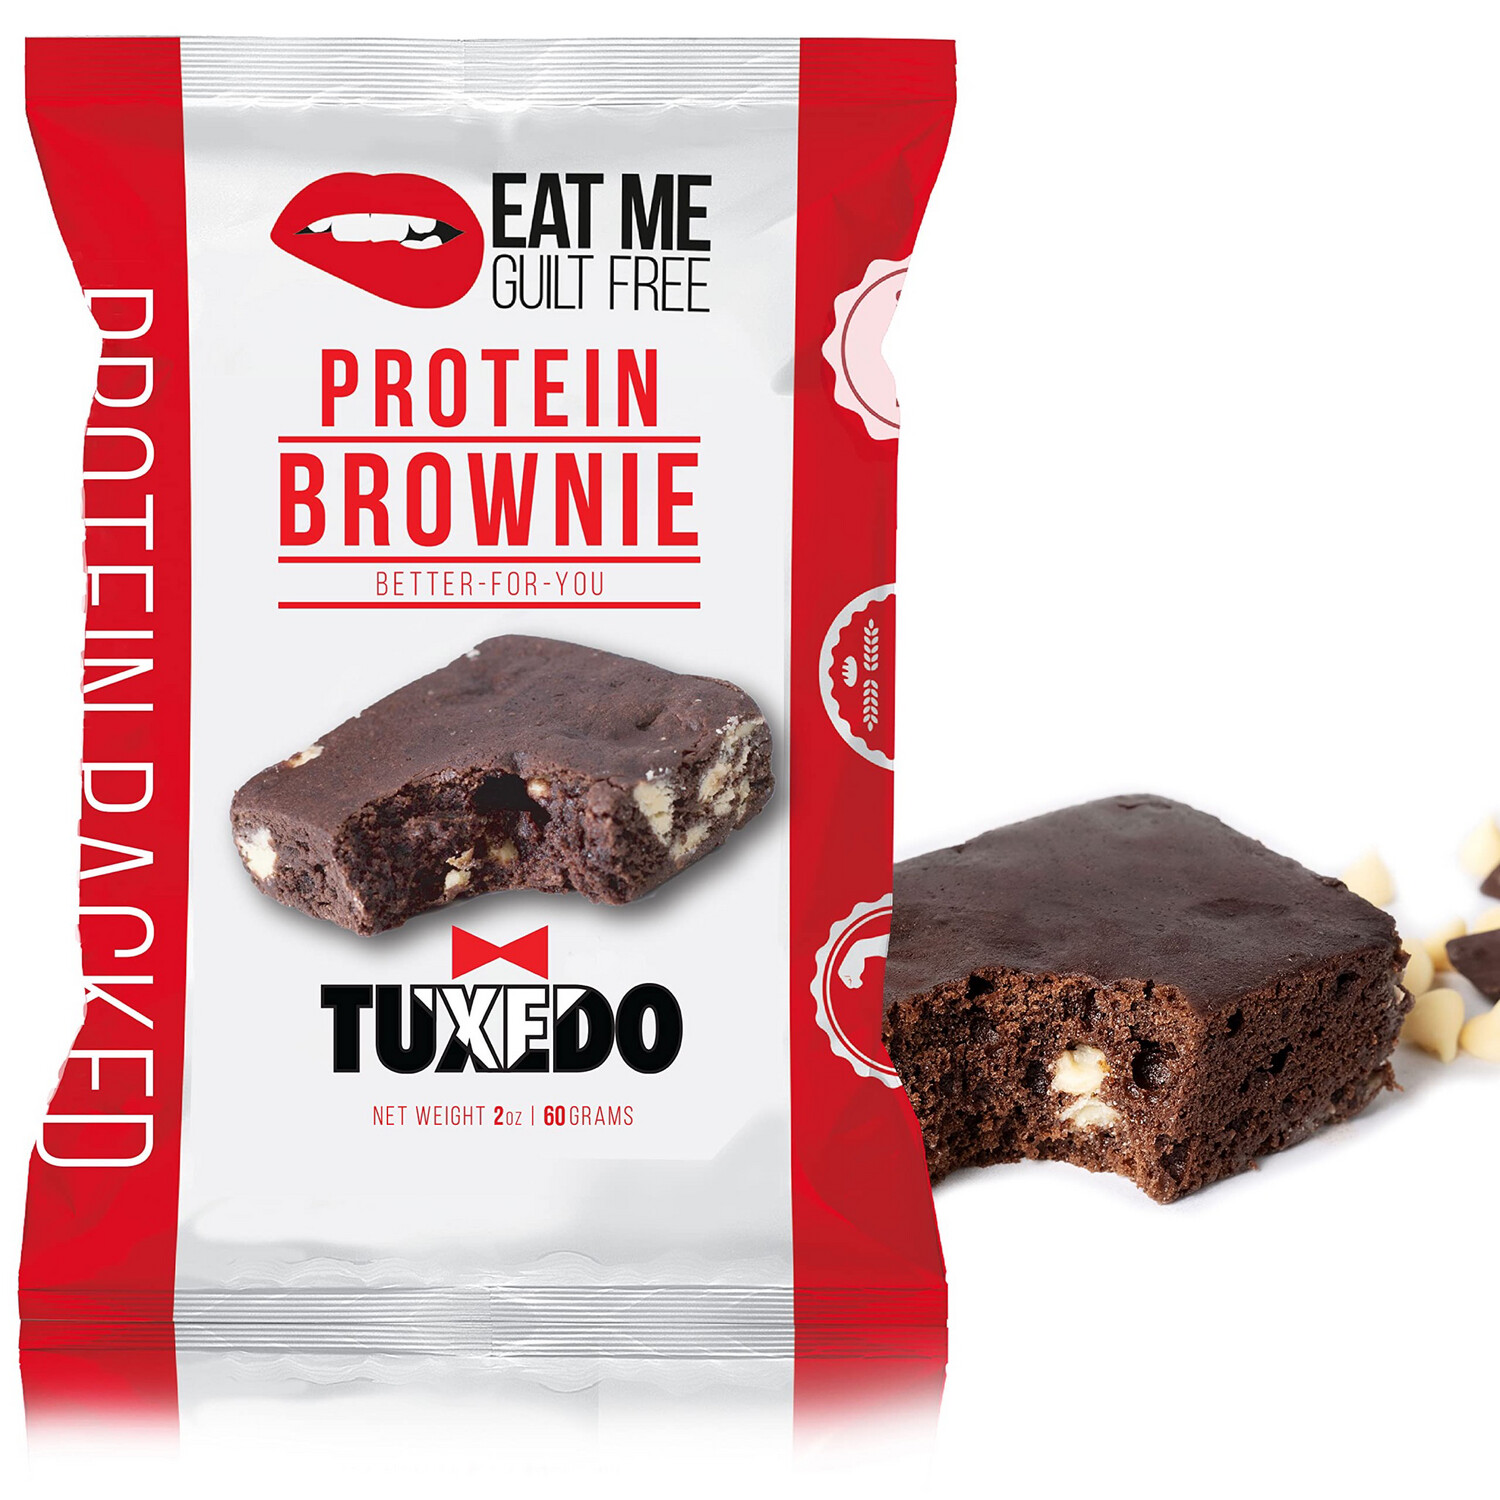 Eat me Guilt Free Tuxedo Protein Brownie 14 g PRO